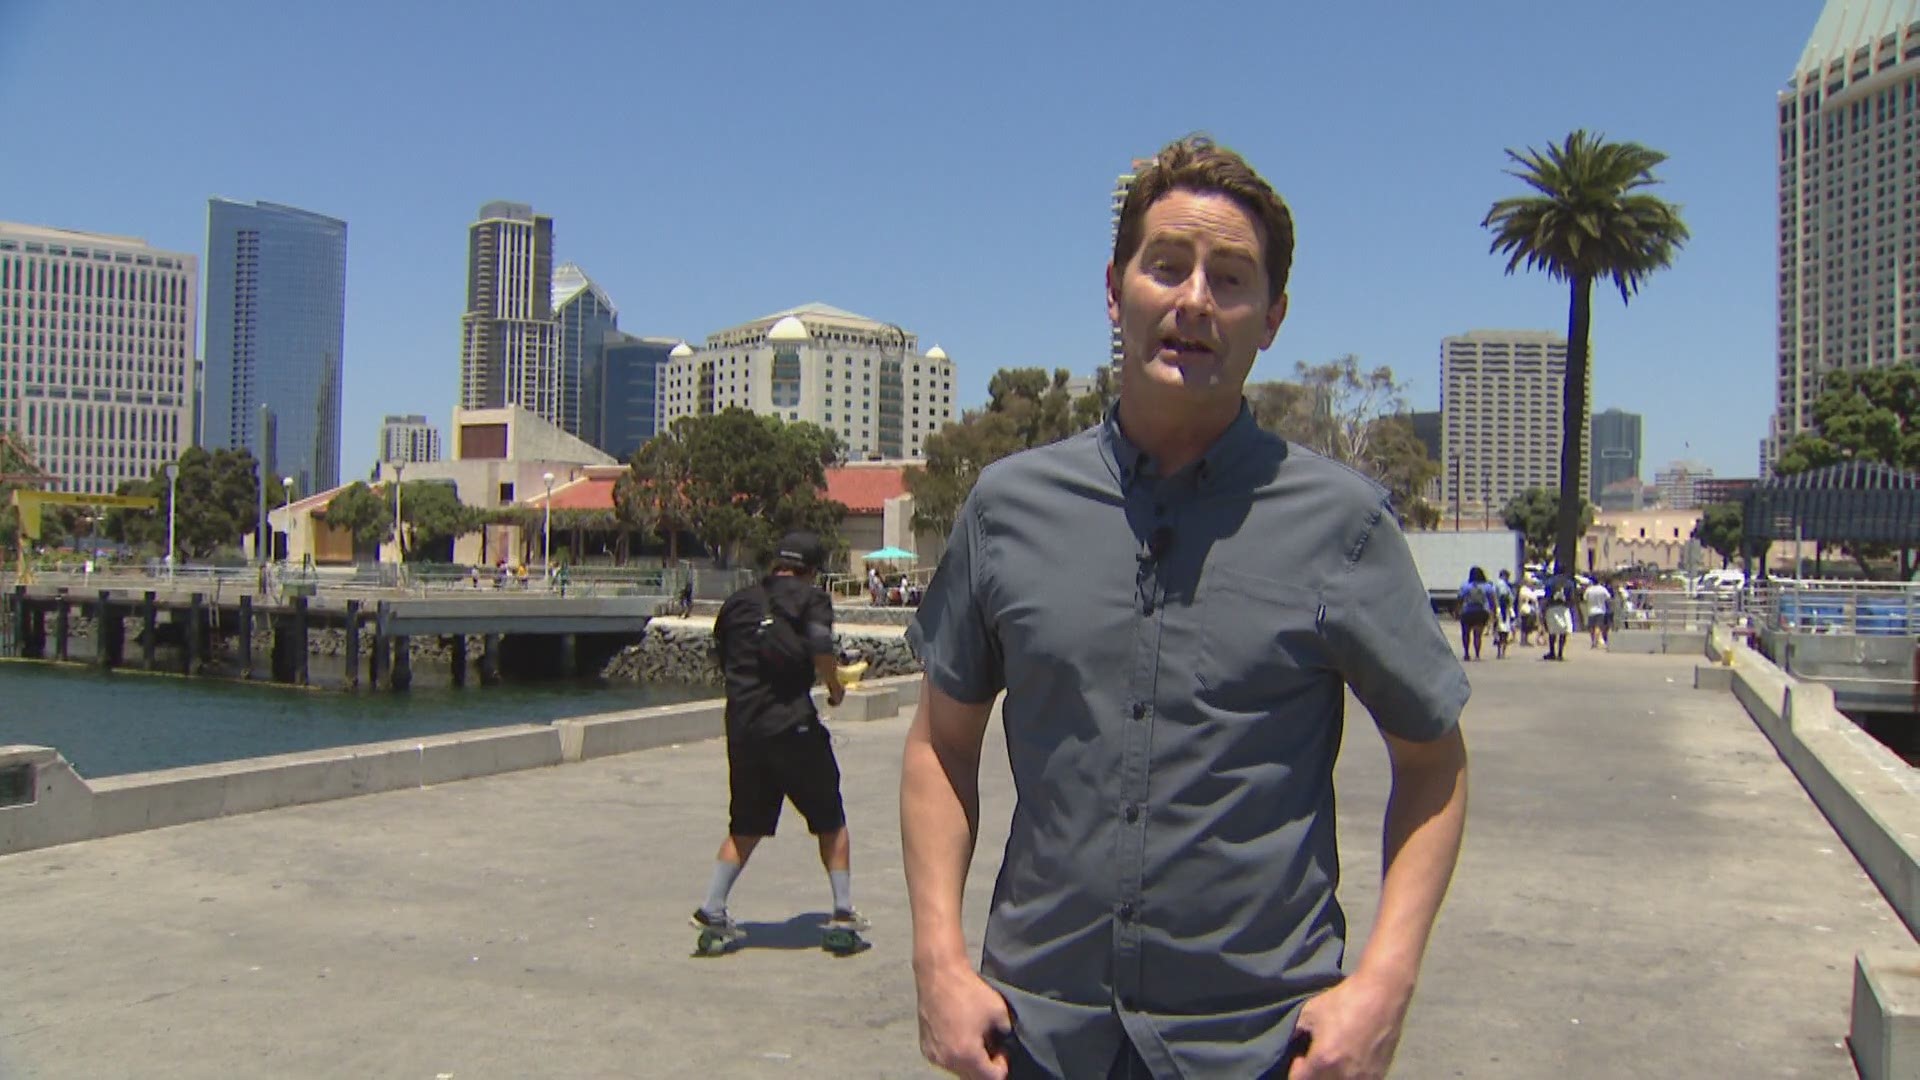 Lance Lynn is a professional free skater spreading joy along San Diego's embarcadero.